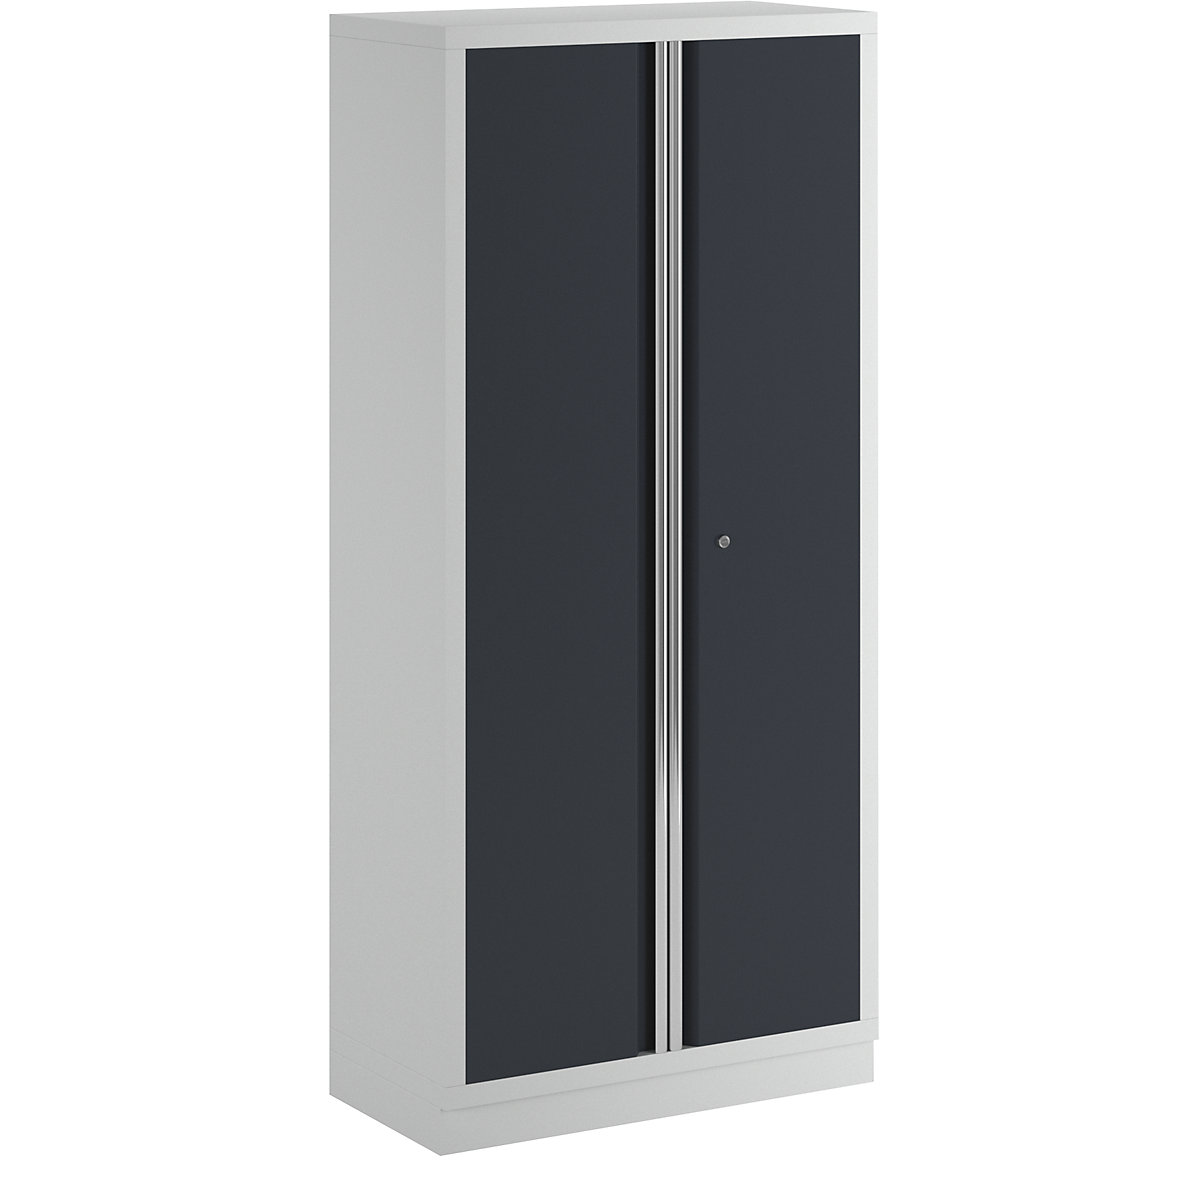 Full height cupboard with hinged door